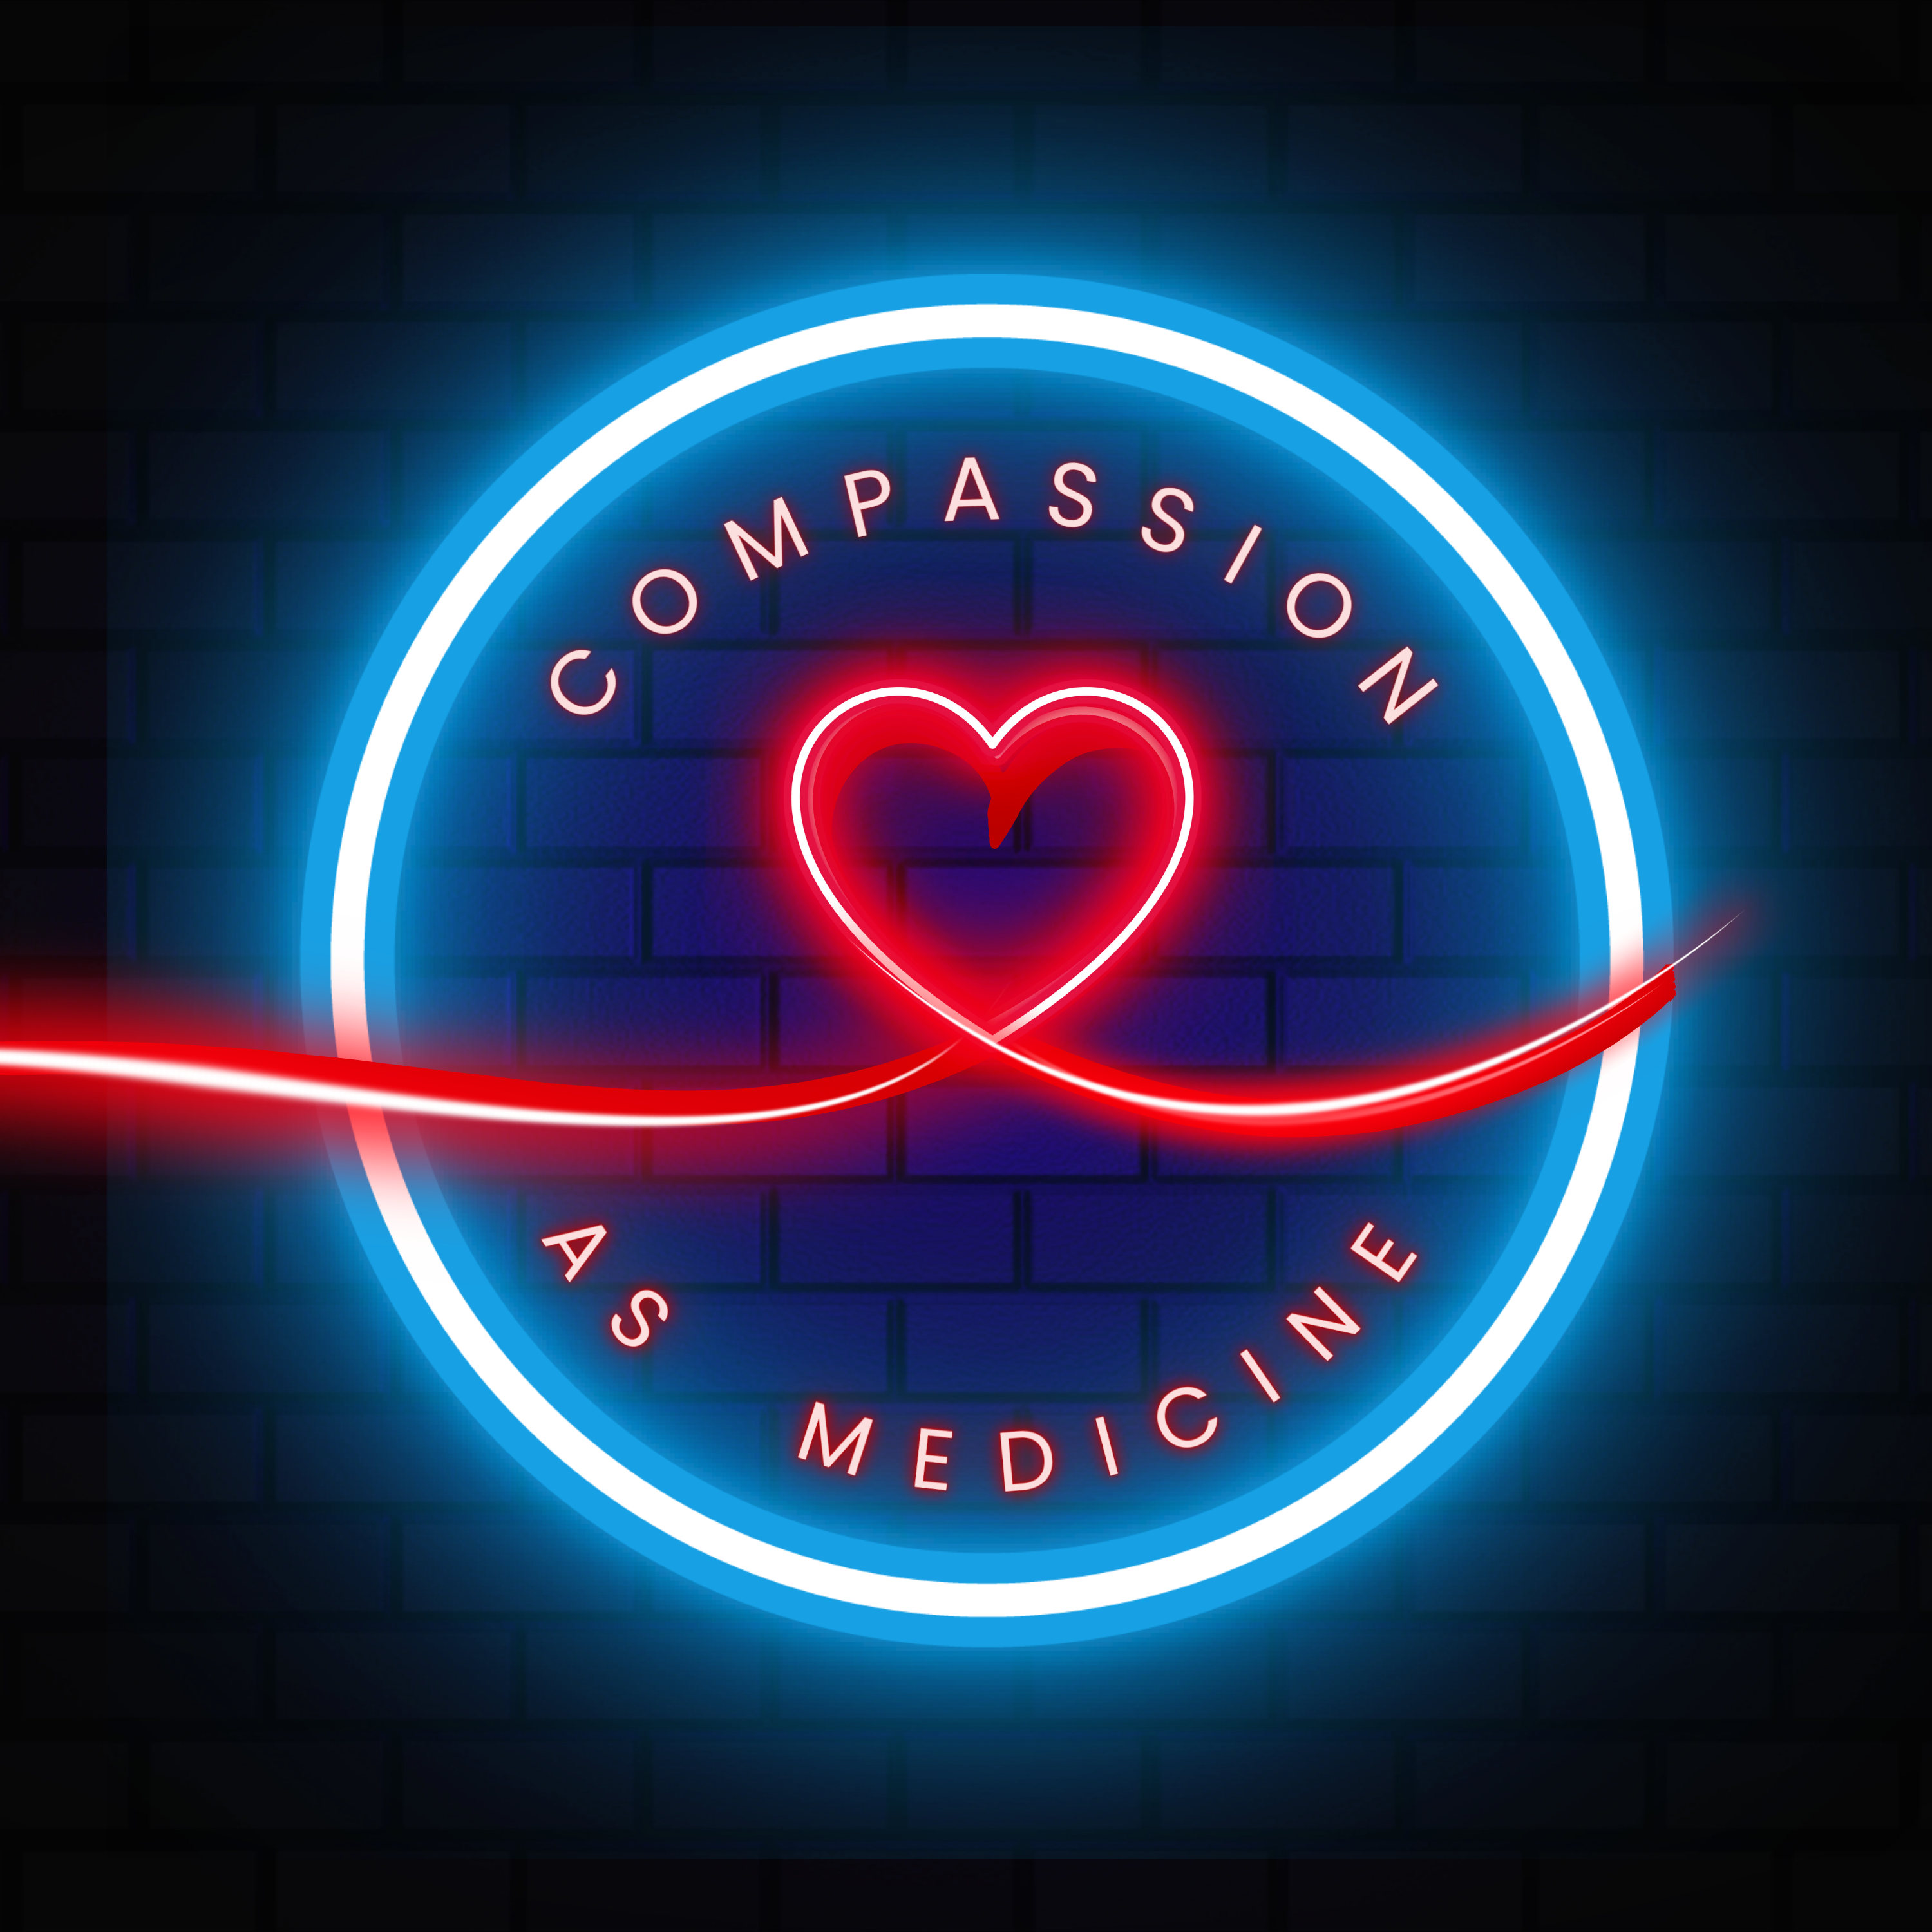 Compassion As Medicine